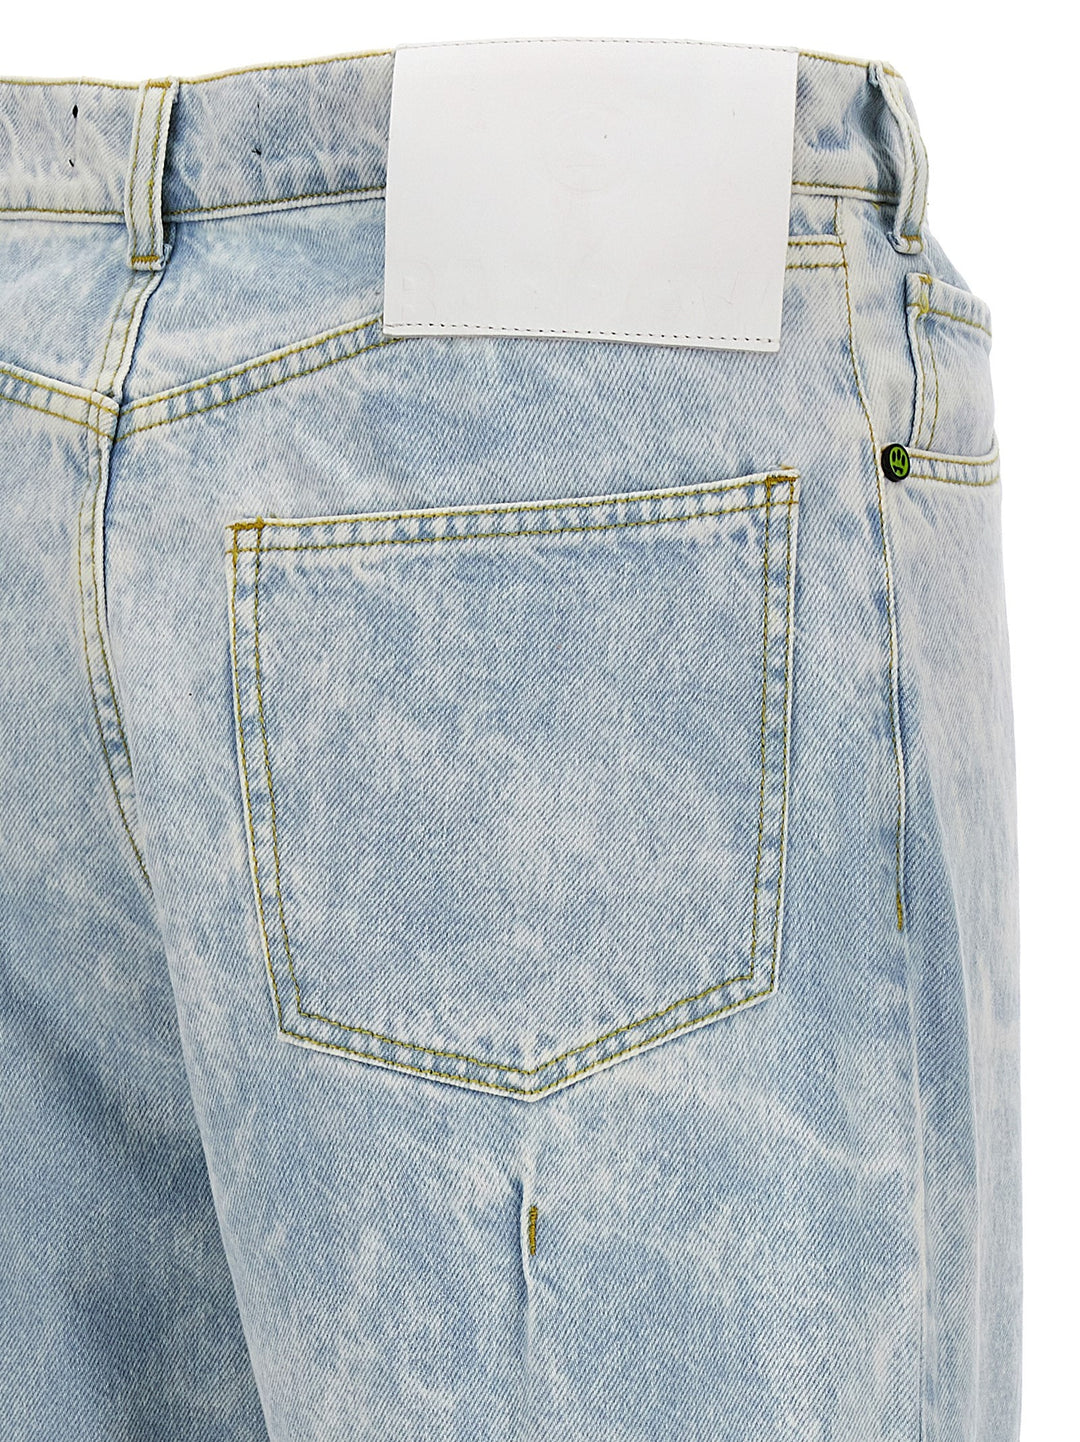 Stitching Detail Jeans Celeste